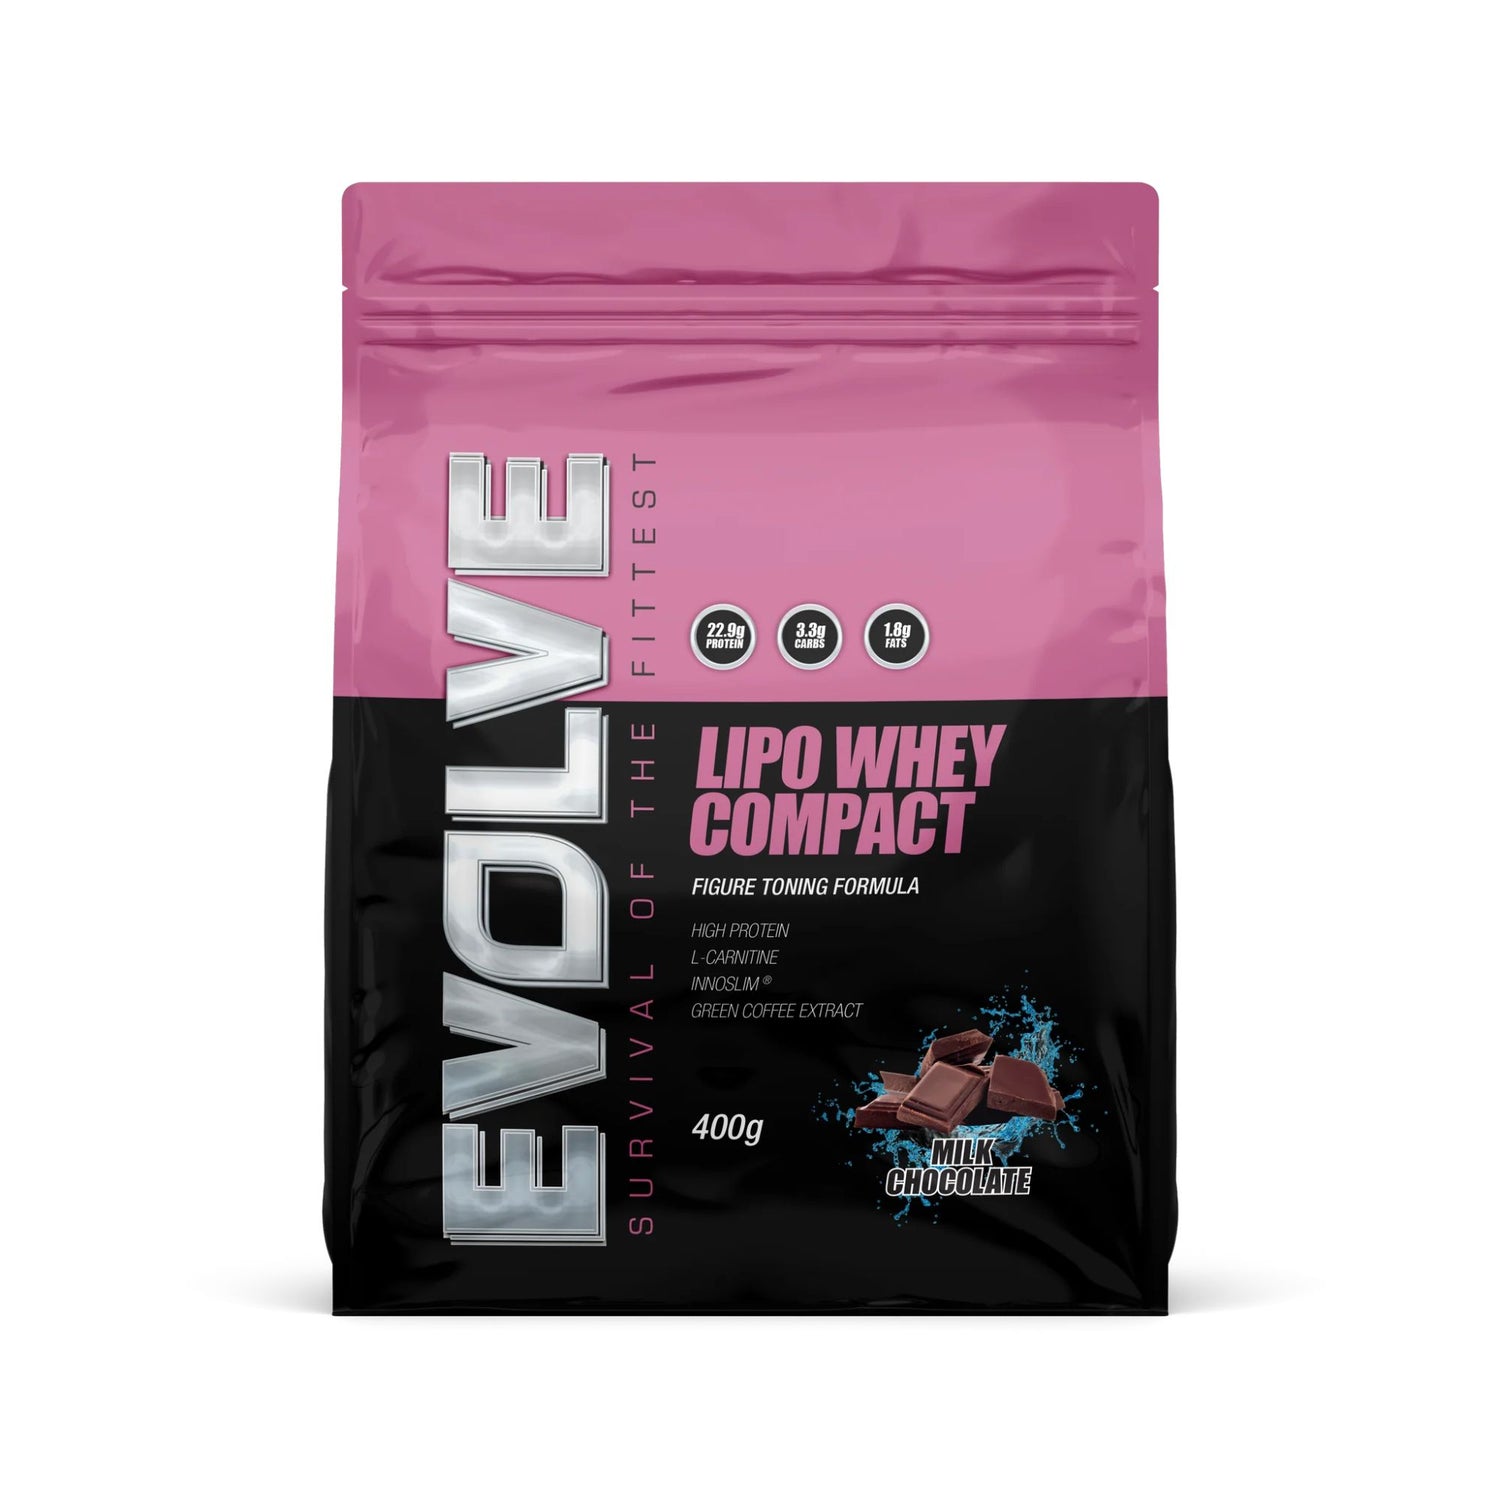 Evolve Lipo Whey Compact Protein Powder Fat Burning